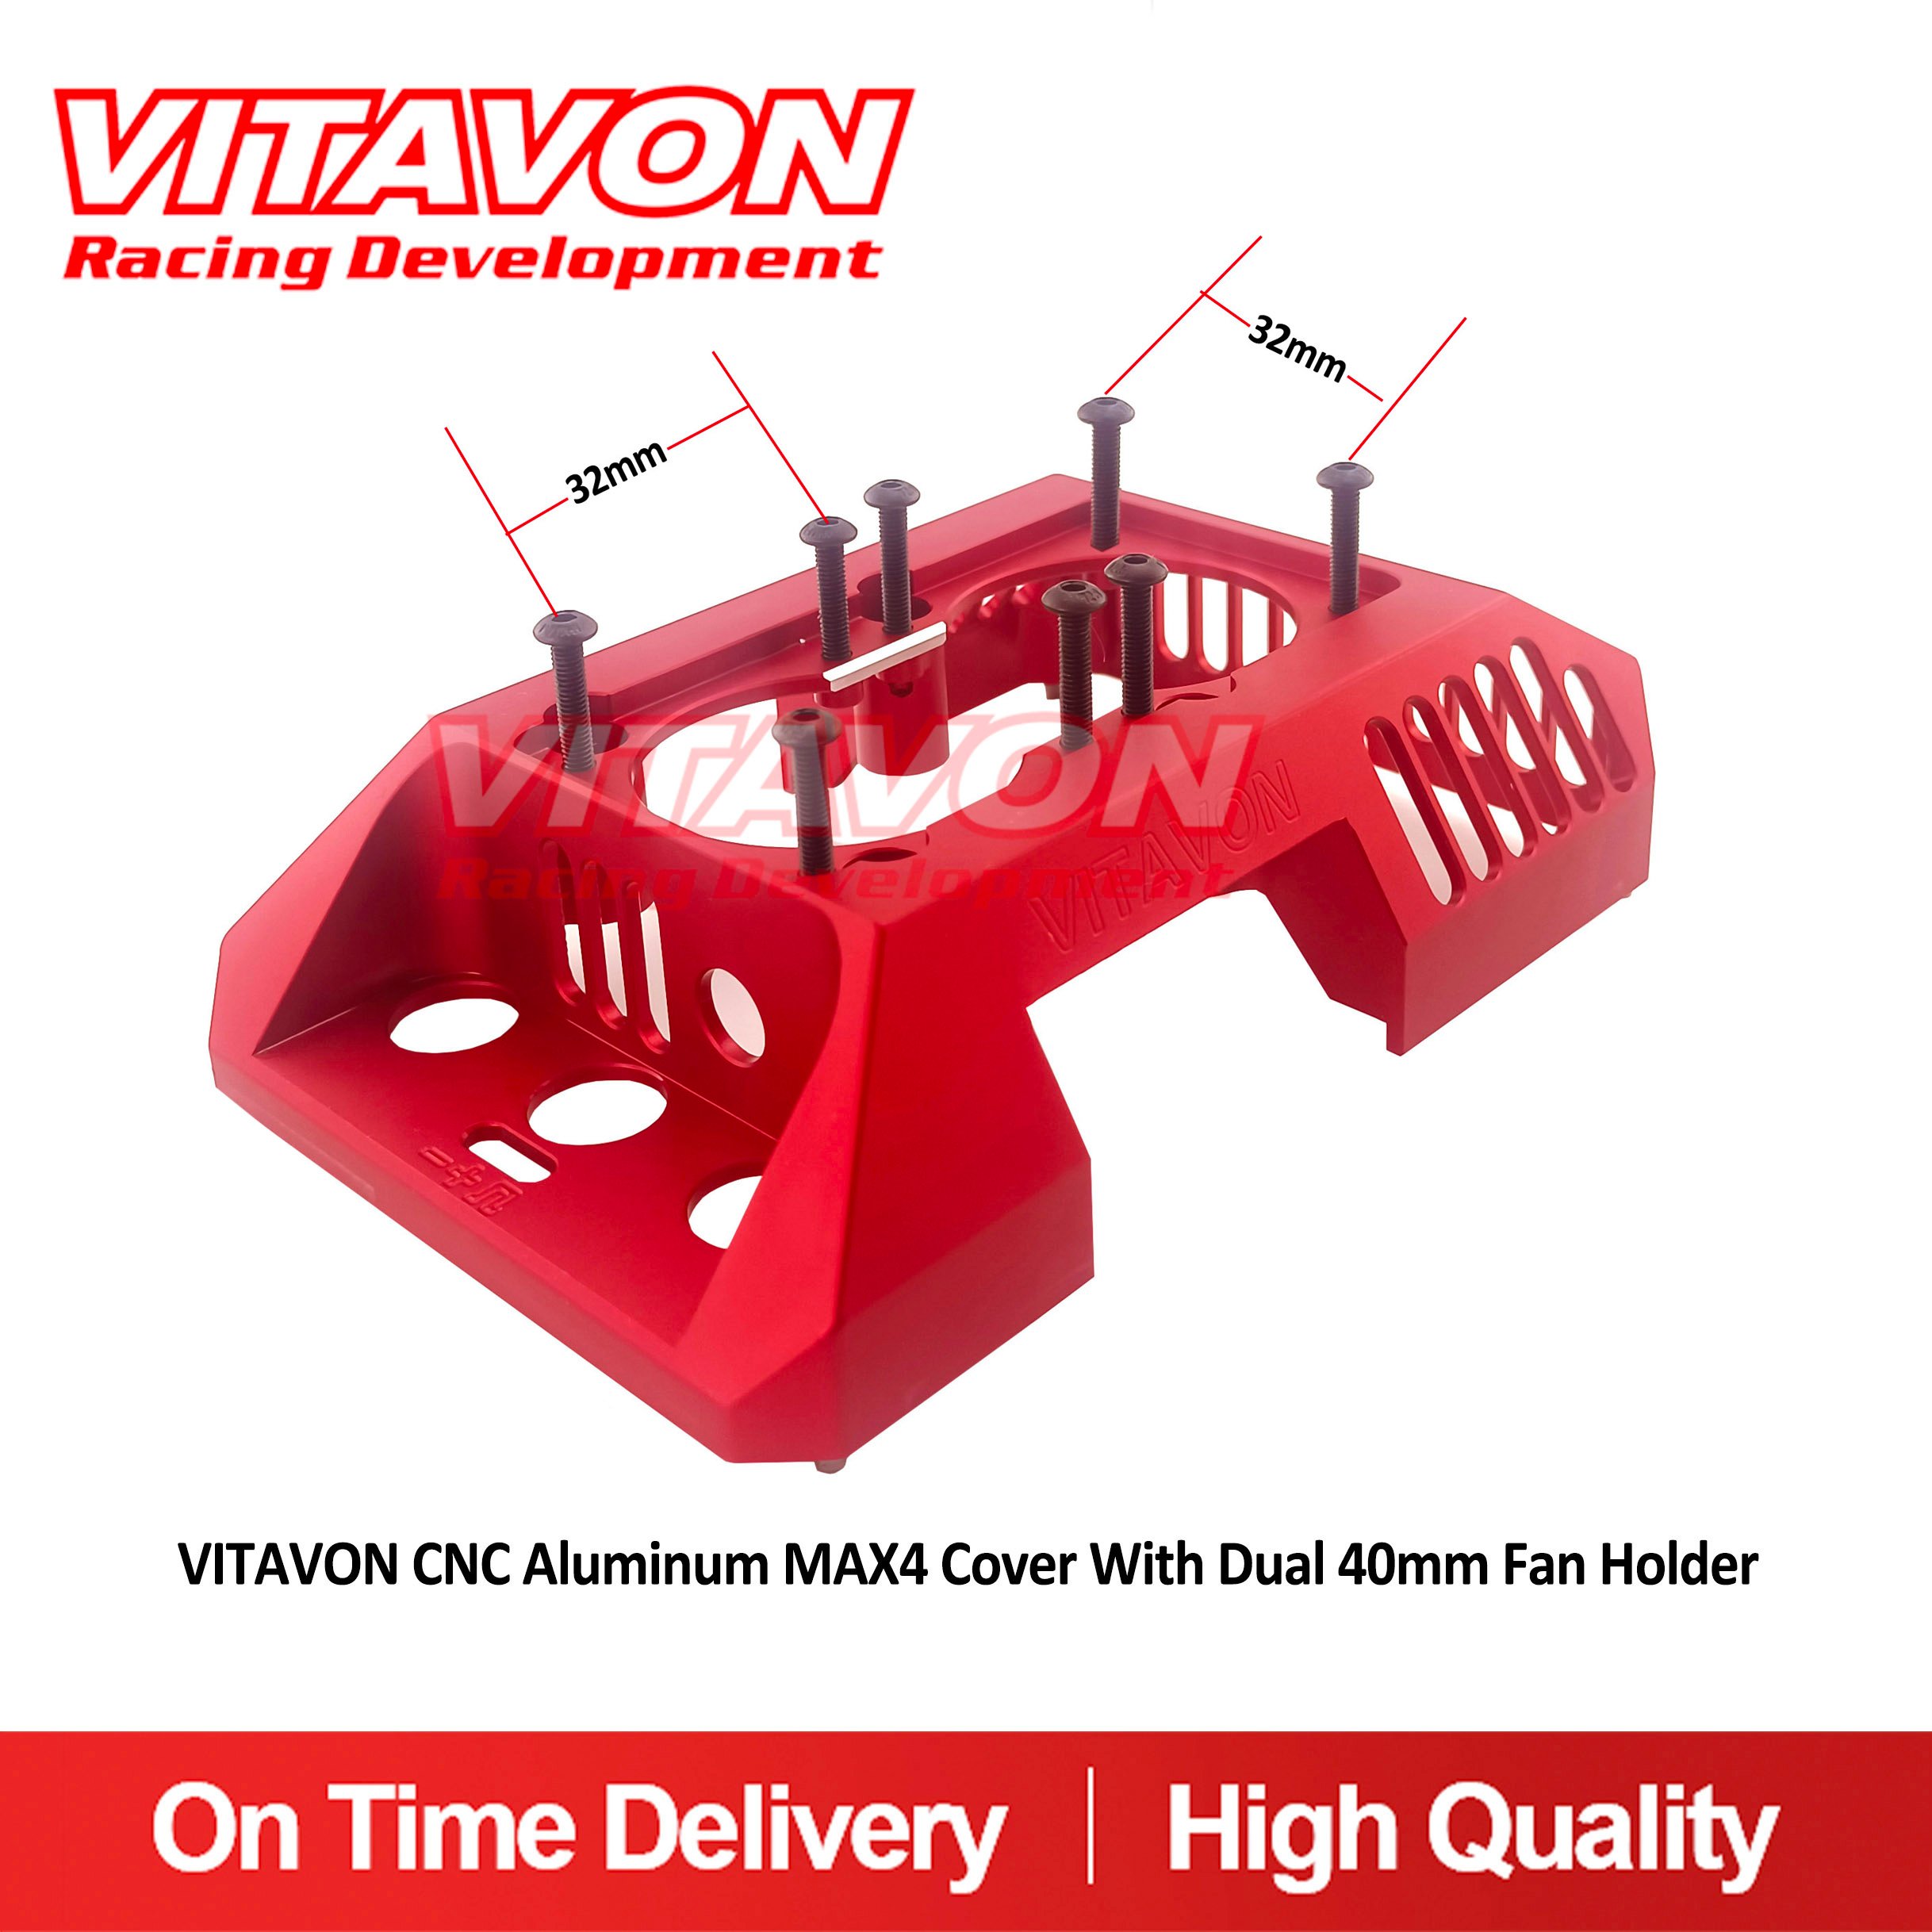 VITAVON CNC Aluminum MAX4 Cover With Dual 40mm Fan Holder